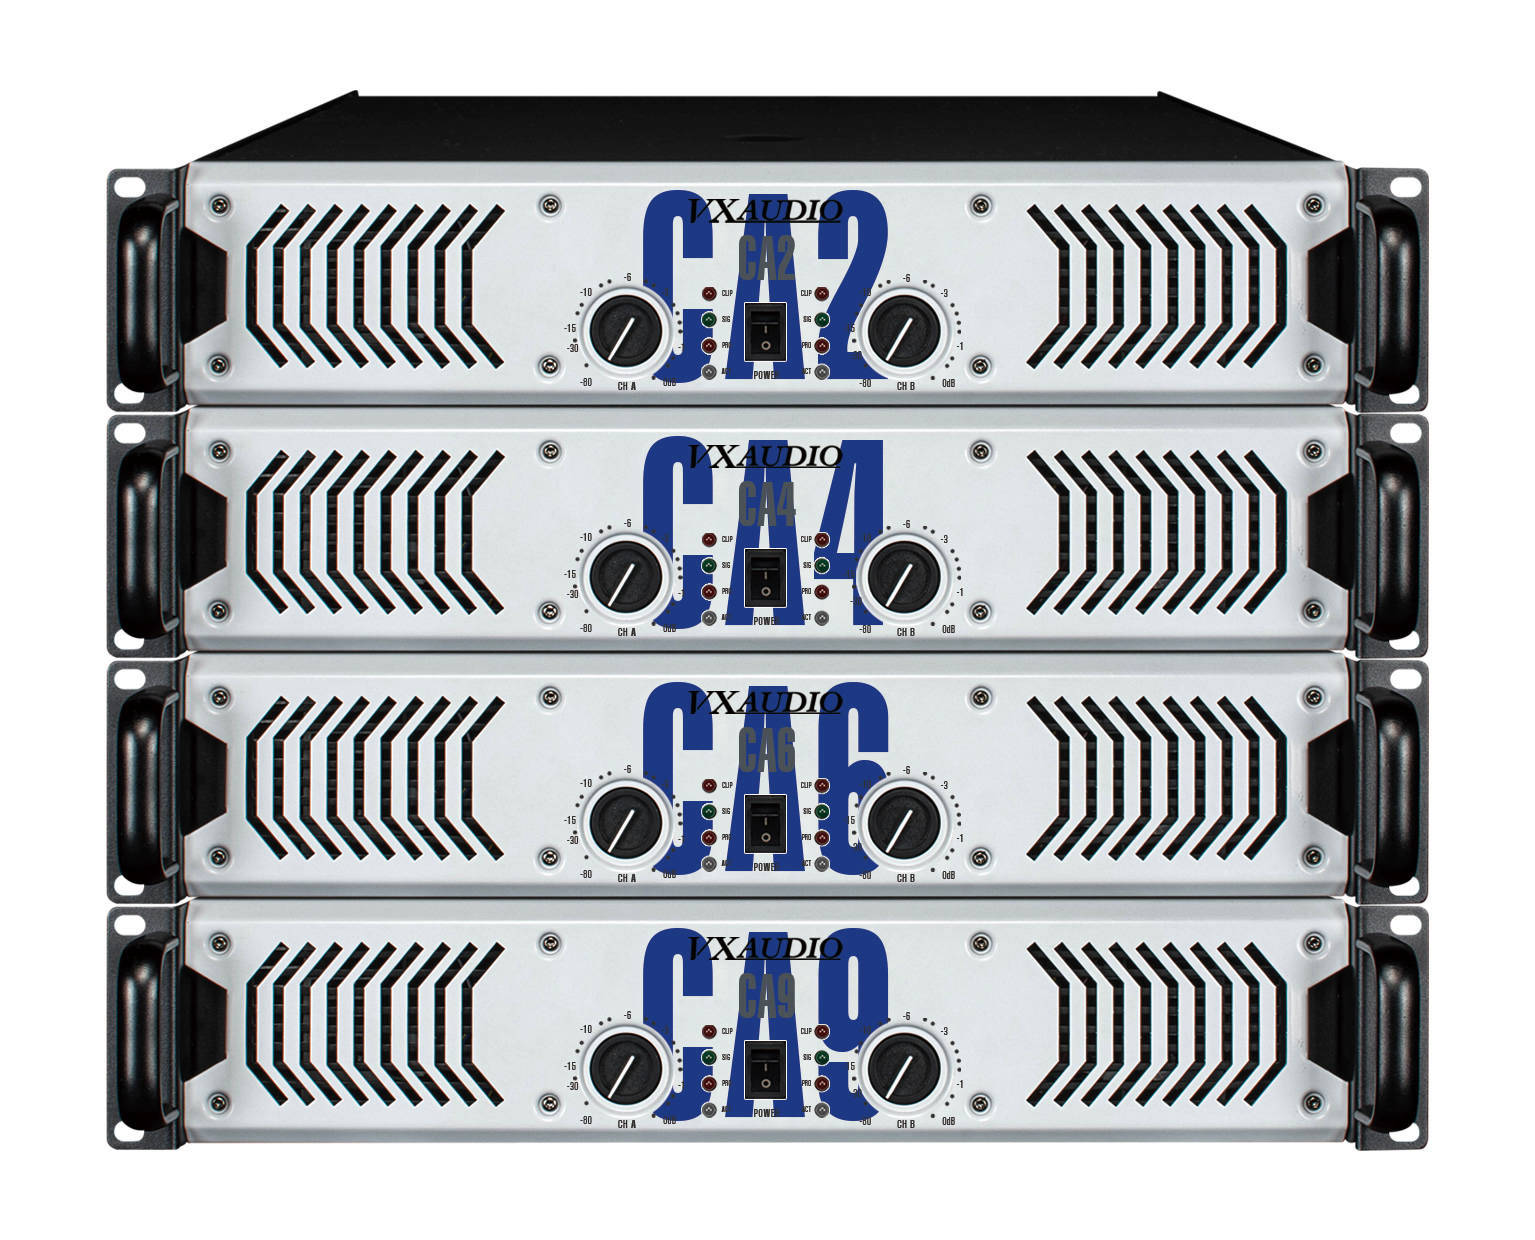 New Front Panel Ca2 Power Amplifier